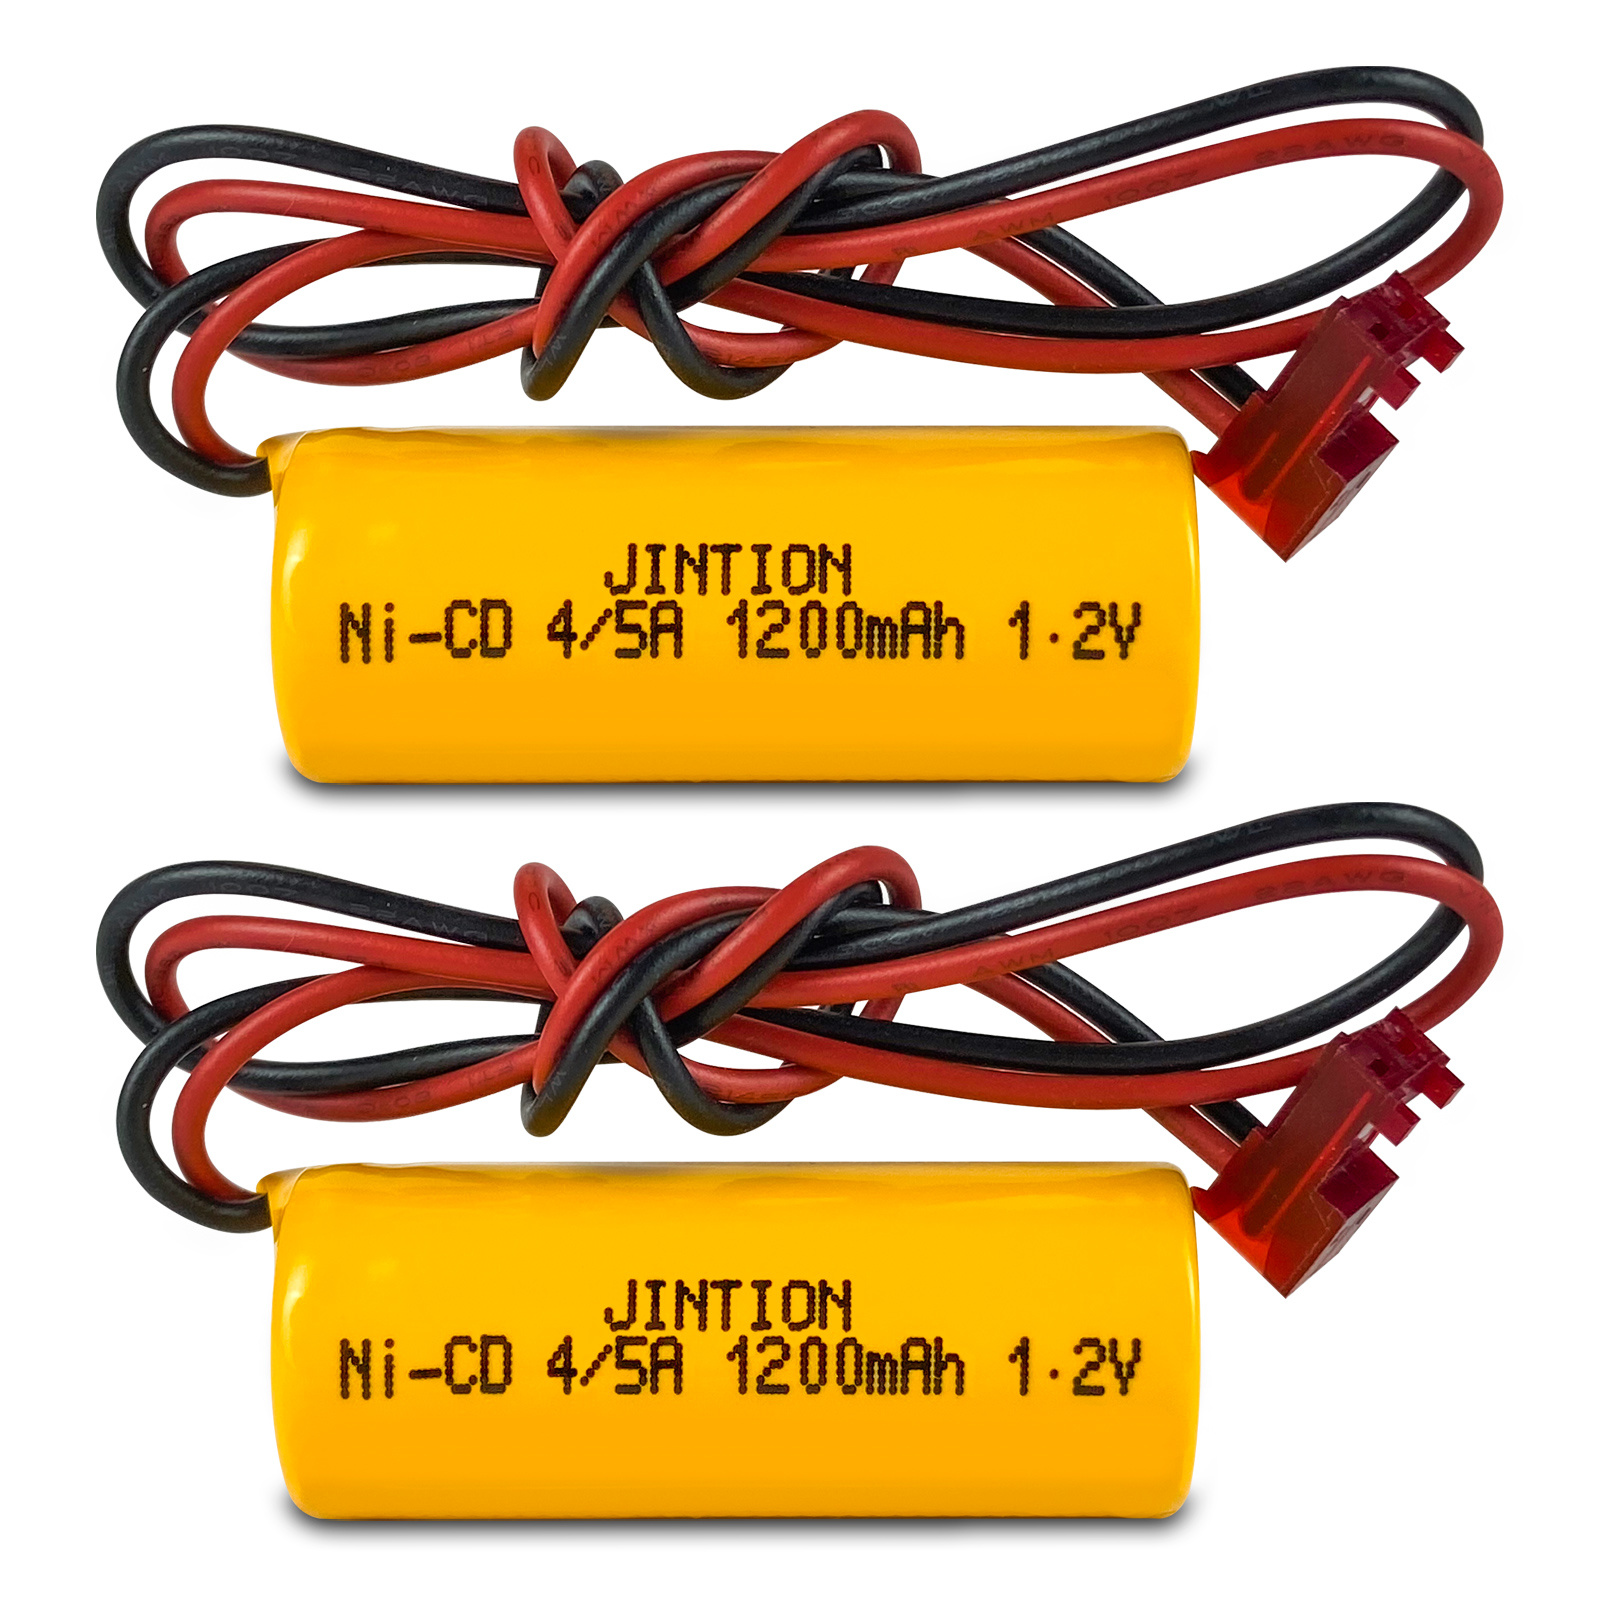 JINTION NICD 4/5A 1200MAH 1.2V nickel cadmium battery ni-cd battery For Lithonia ELB1P201N2 ELB1P2901N ELB1P201N ANIC1493 OSA212